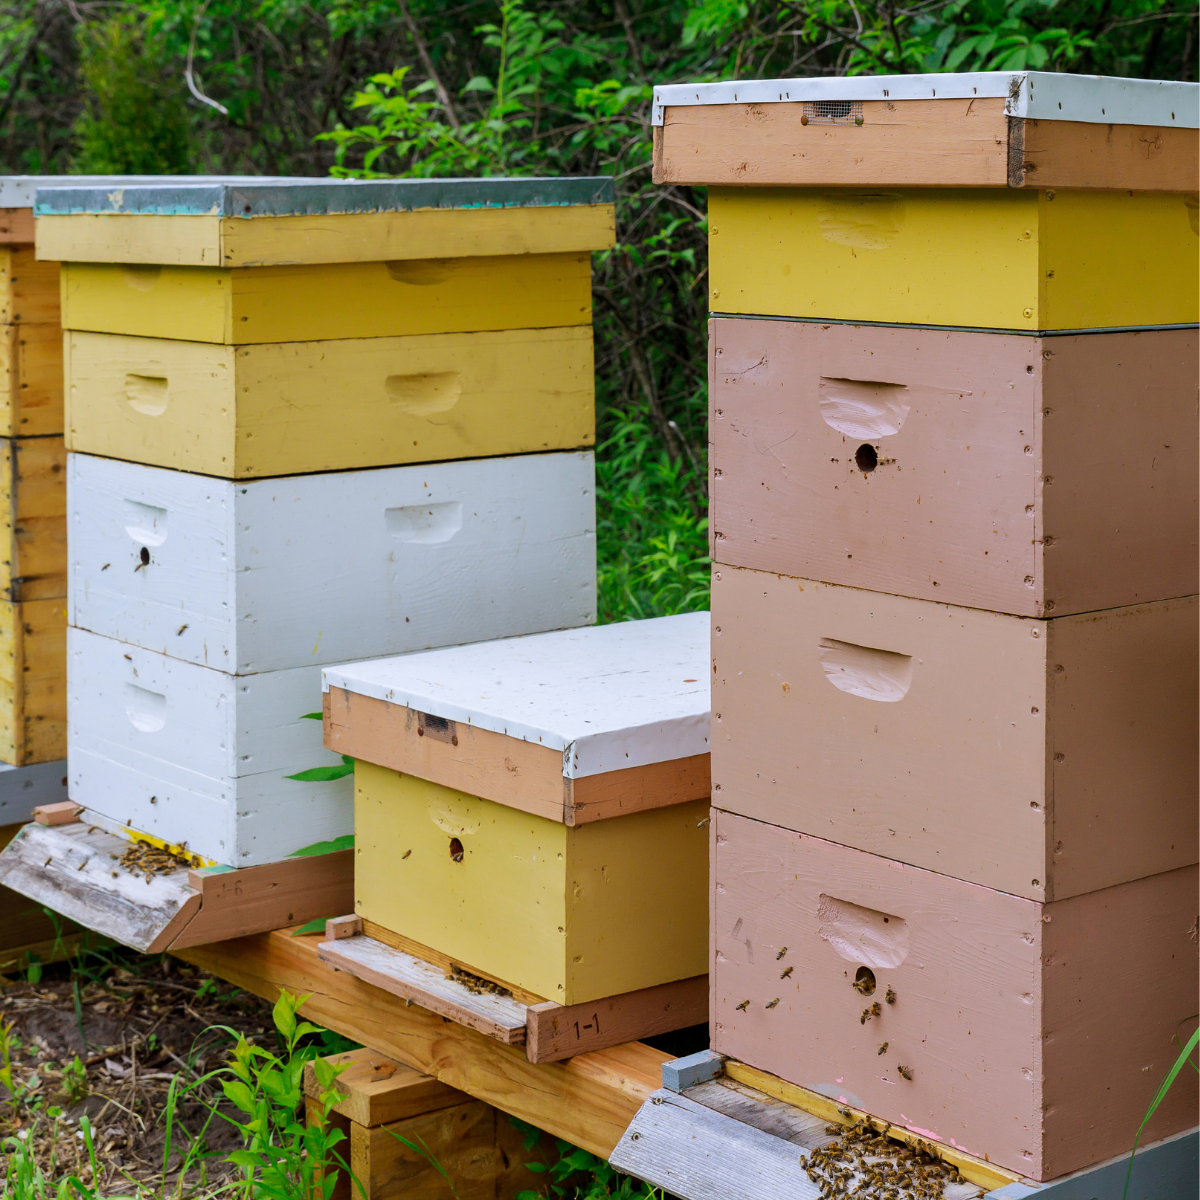 Beekeeping 101: A beginners Guide To Raising Honey Bees